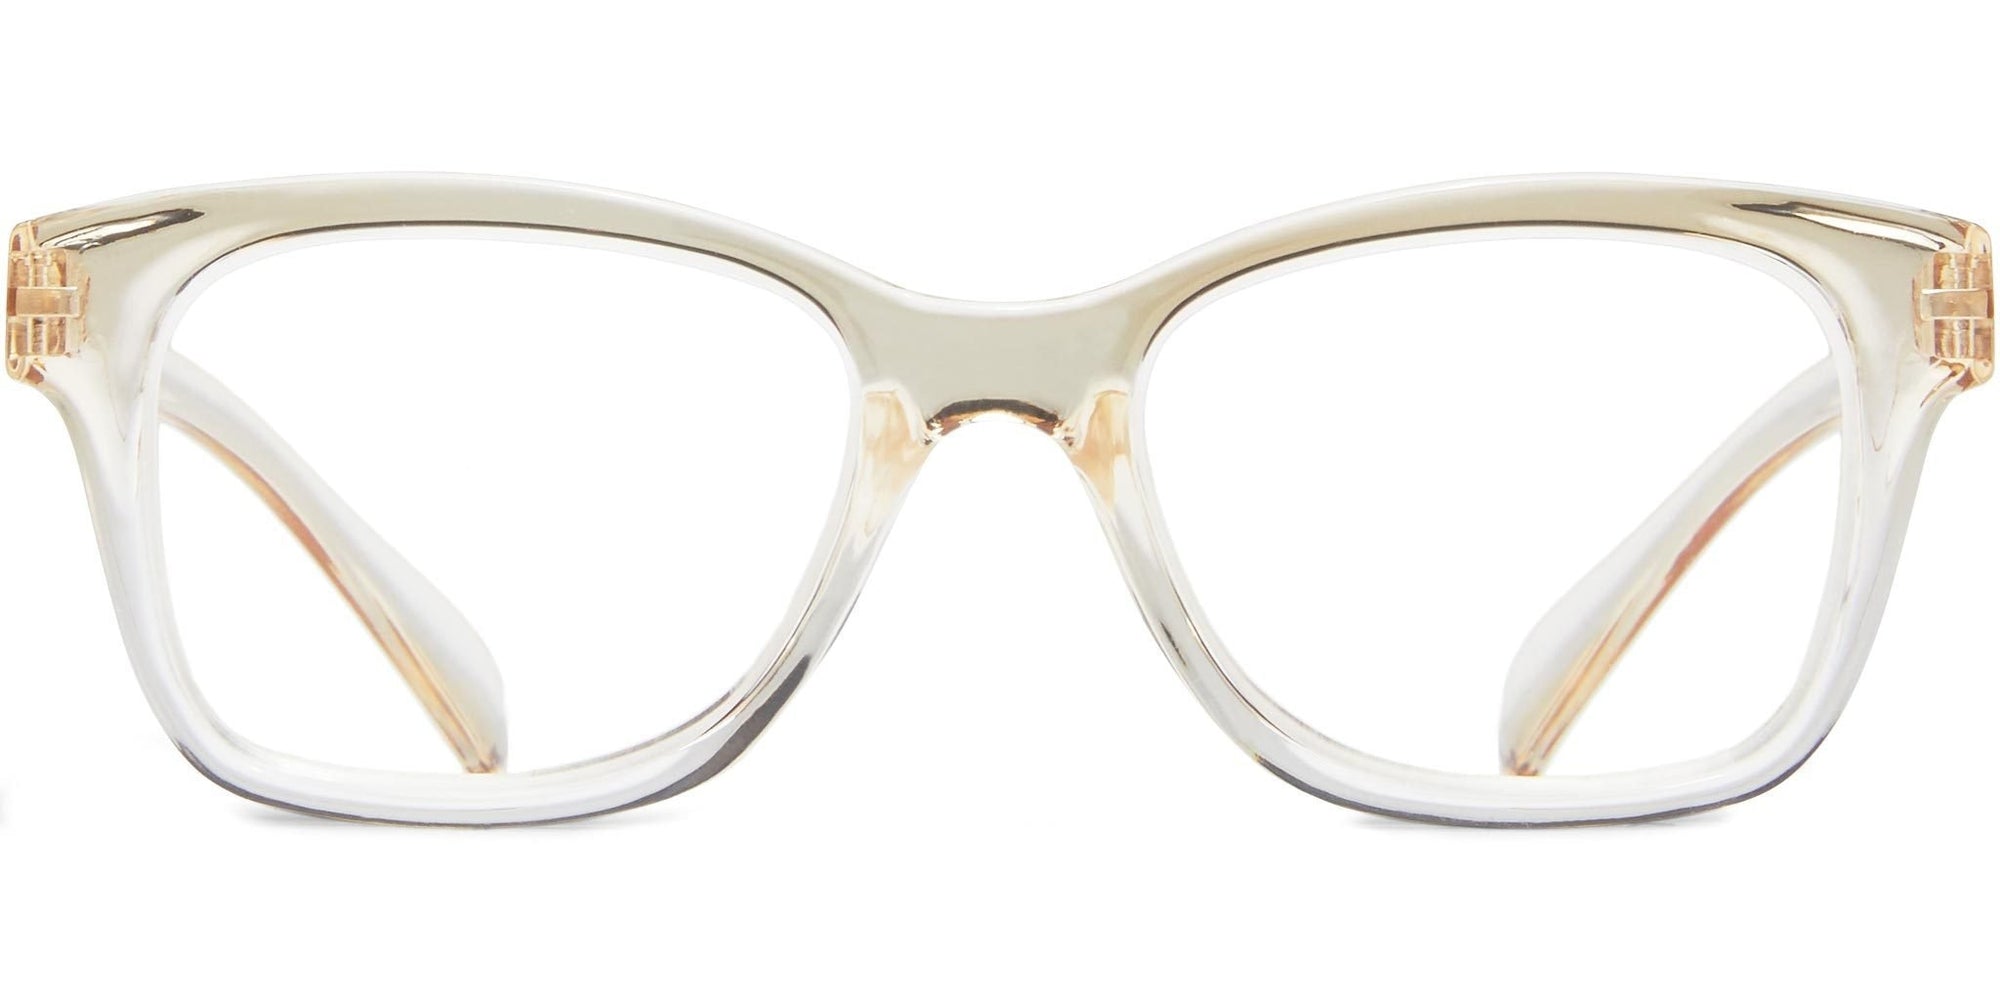 Danielle - Tan/Crystal / 1.25 - Reading Glasses